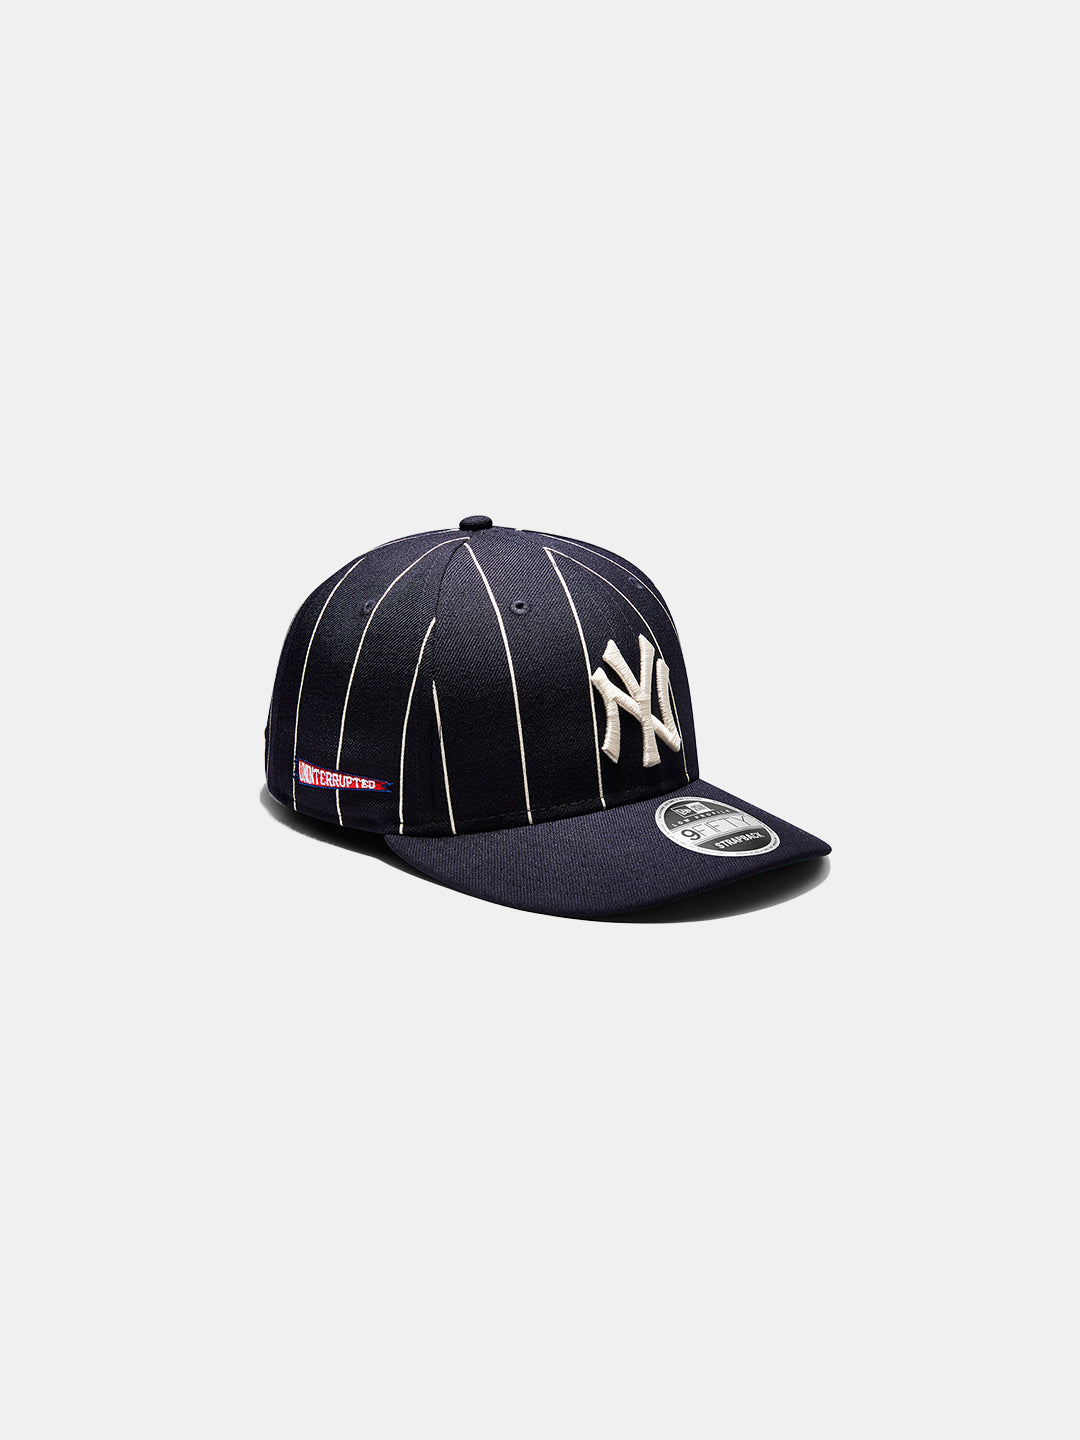 bag New Era Side Pouch MLB New York Yankees - Black/White